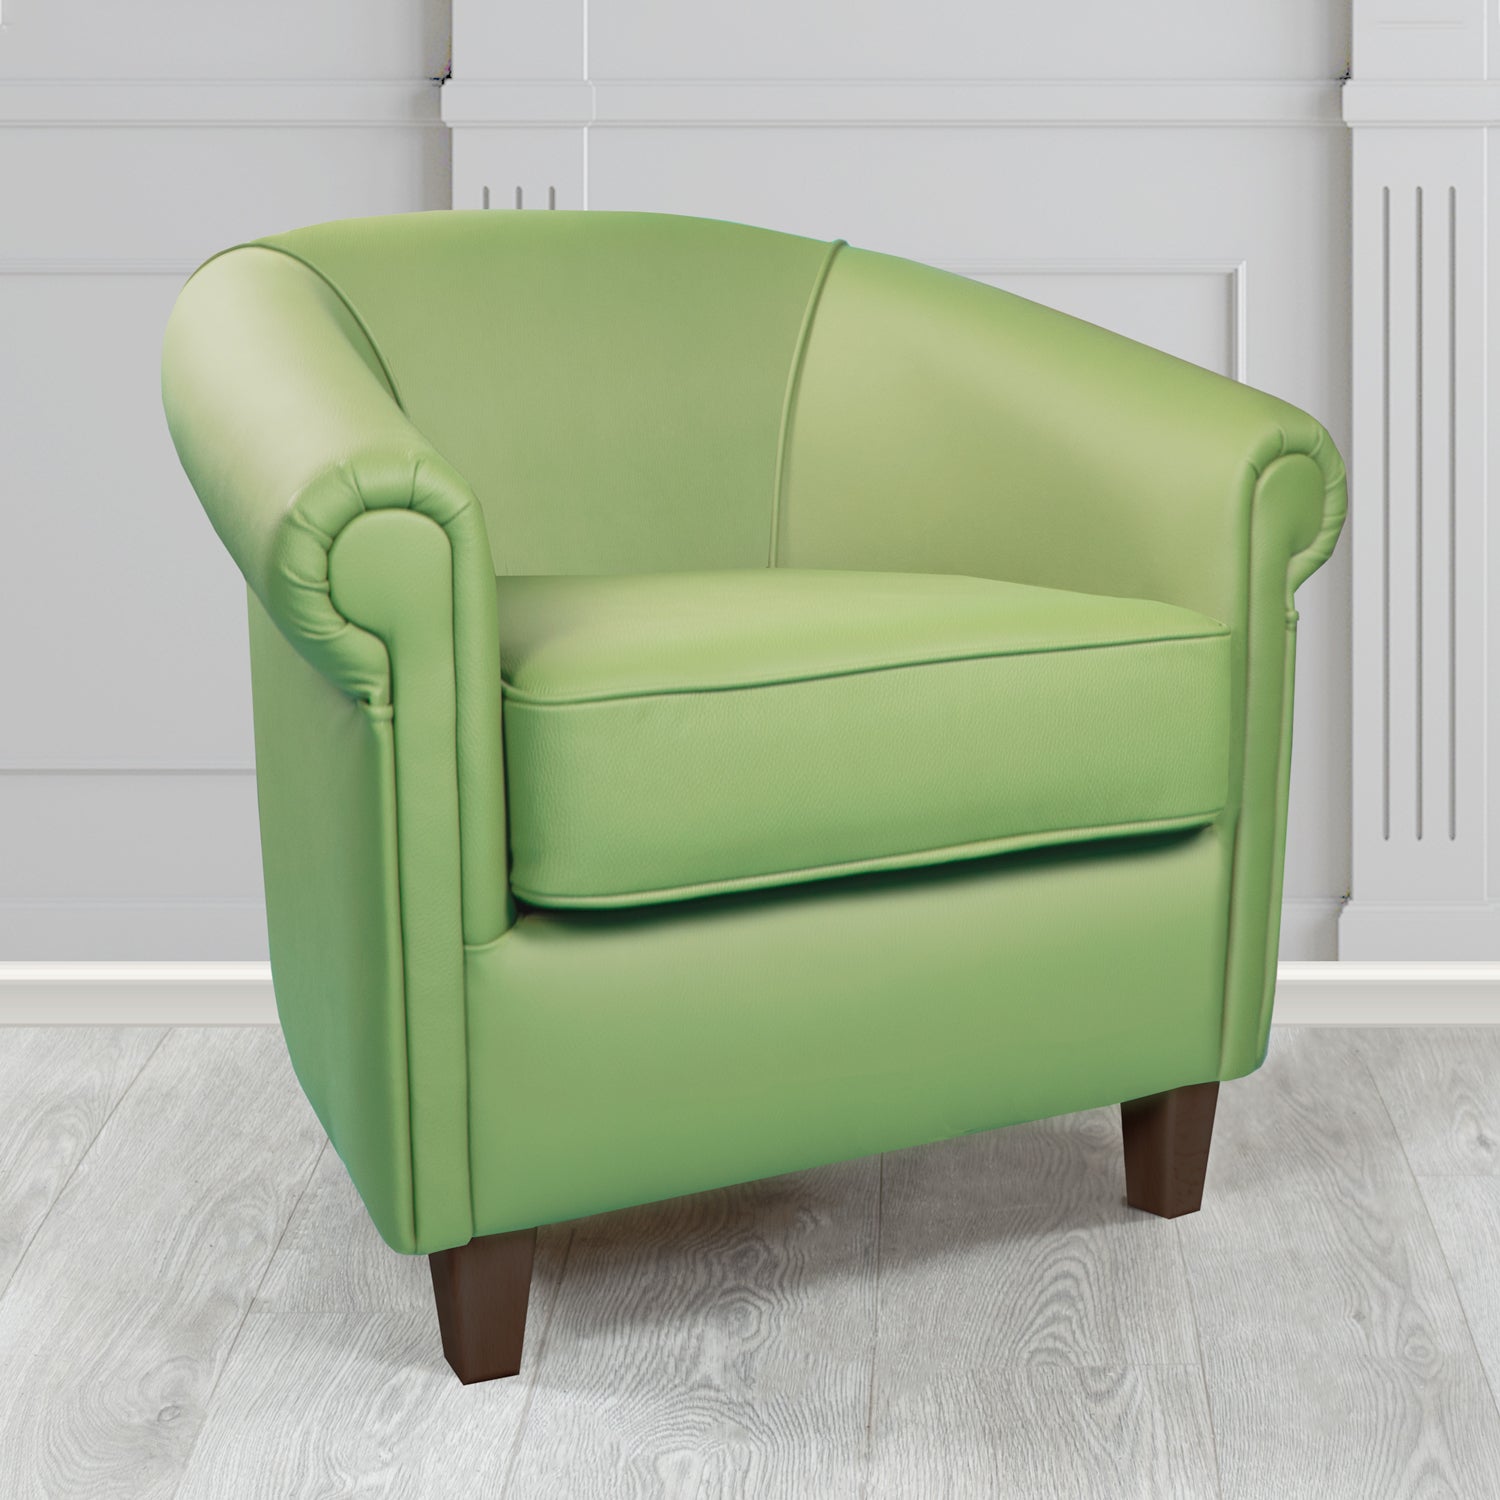 Siena Tub Chair in Crib 5 Shelly Pea Green Genuine Leather - The Tub Chair Shop